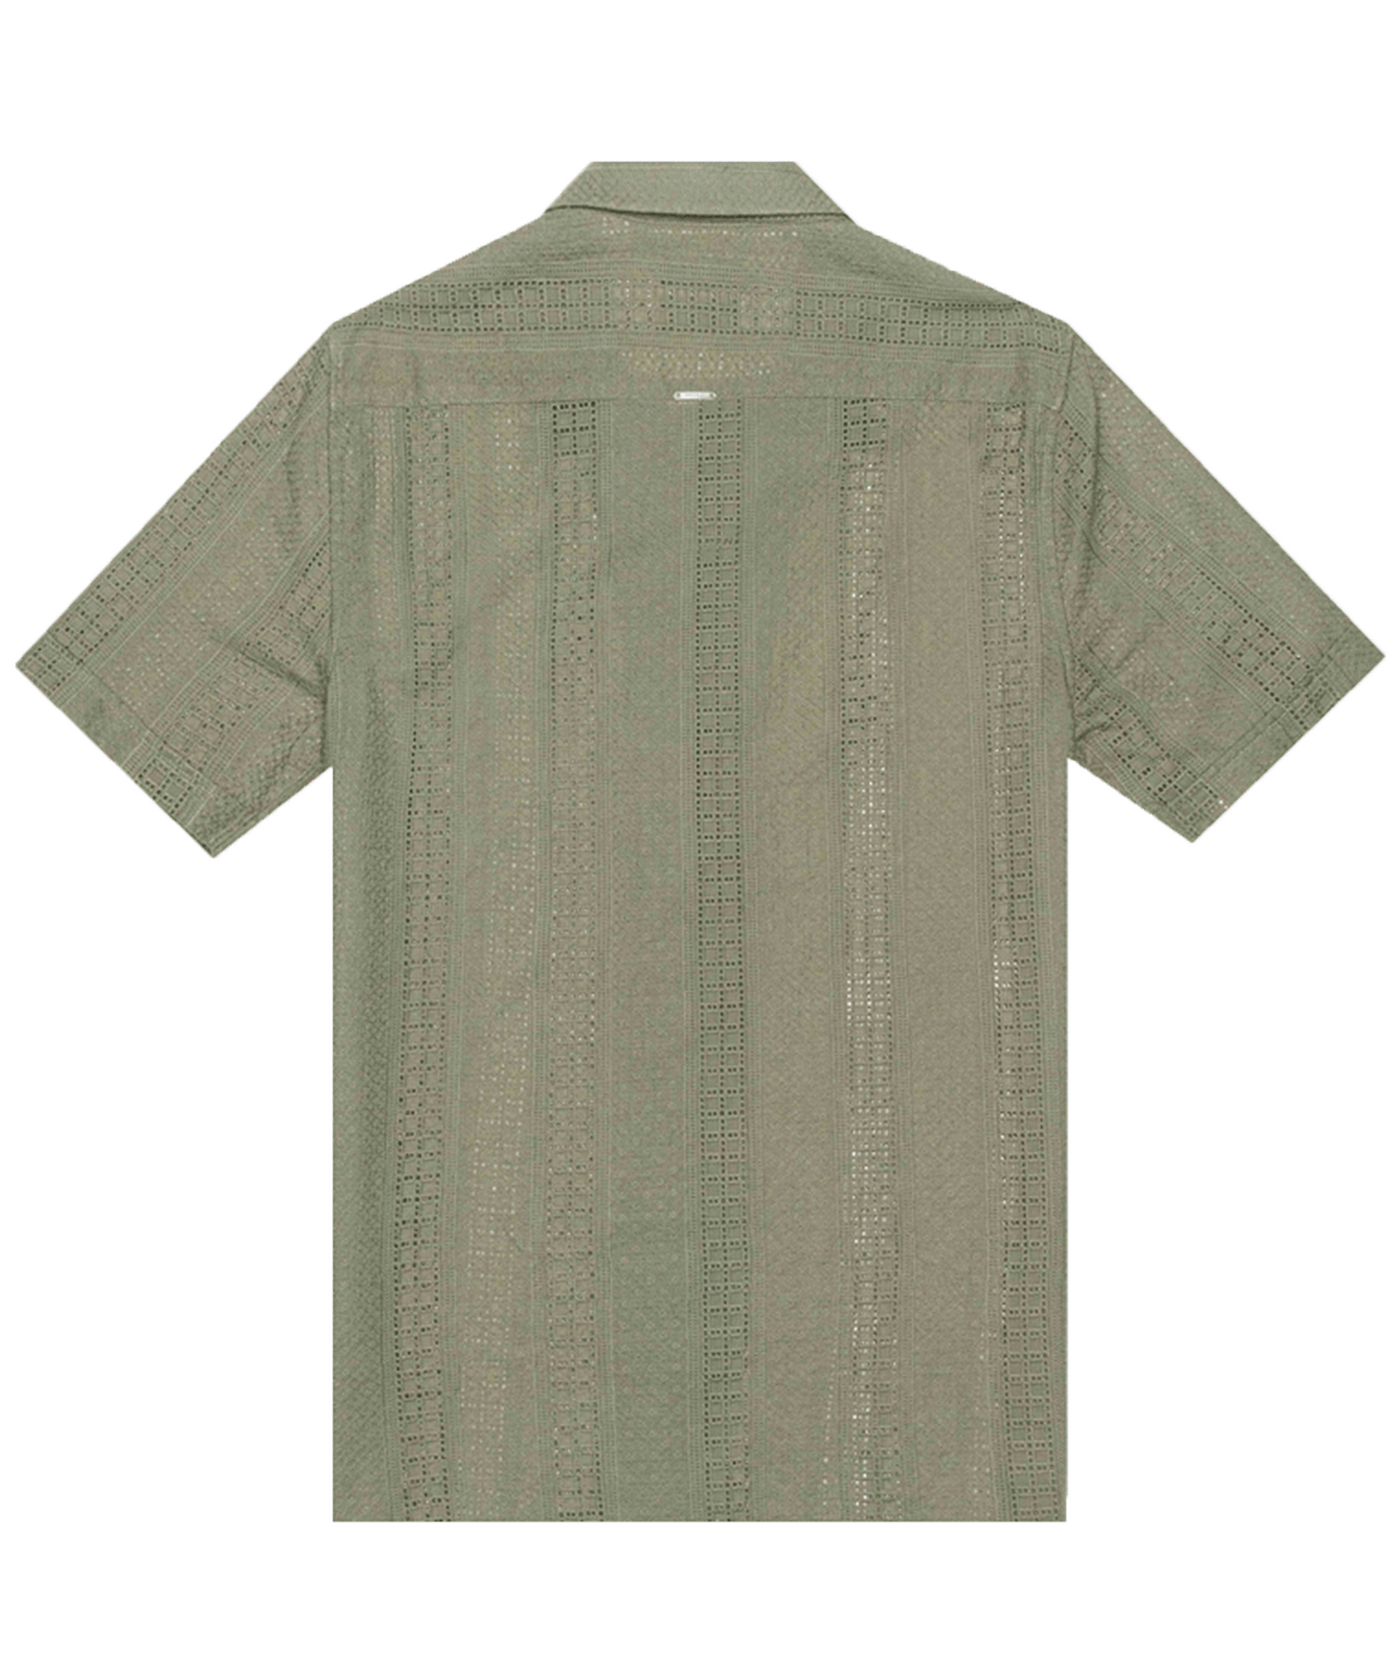 Antony Morato - Mmss00171-fa900132 - Honolulu Shirt - 4041 Green